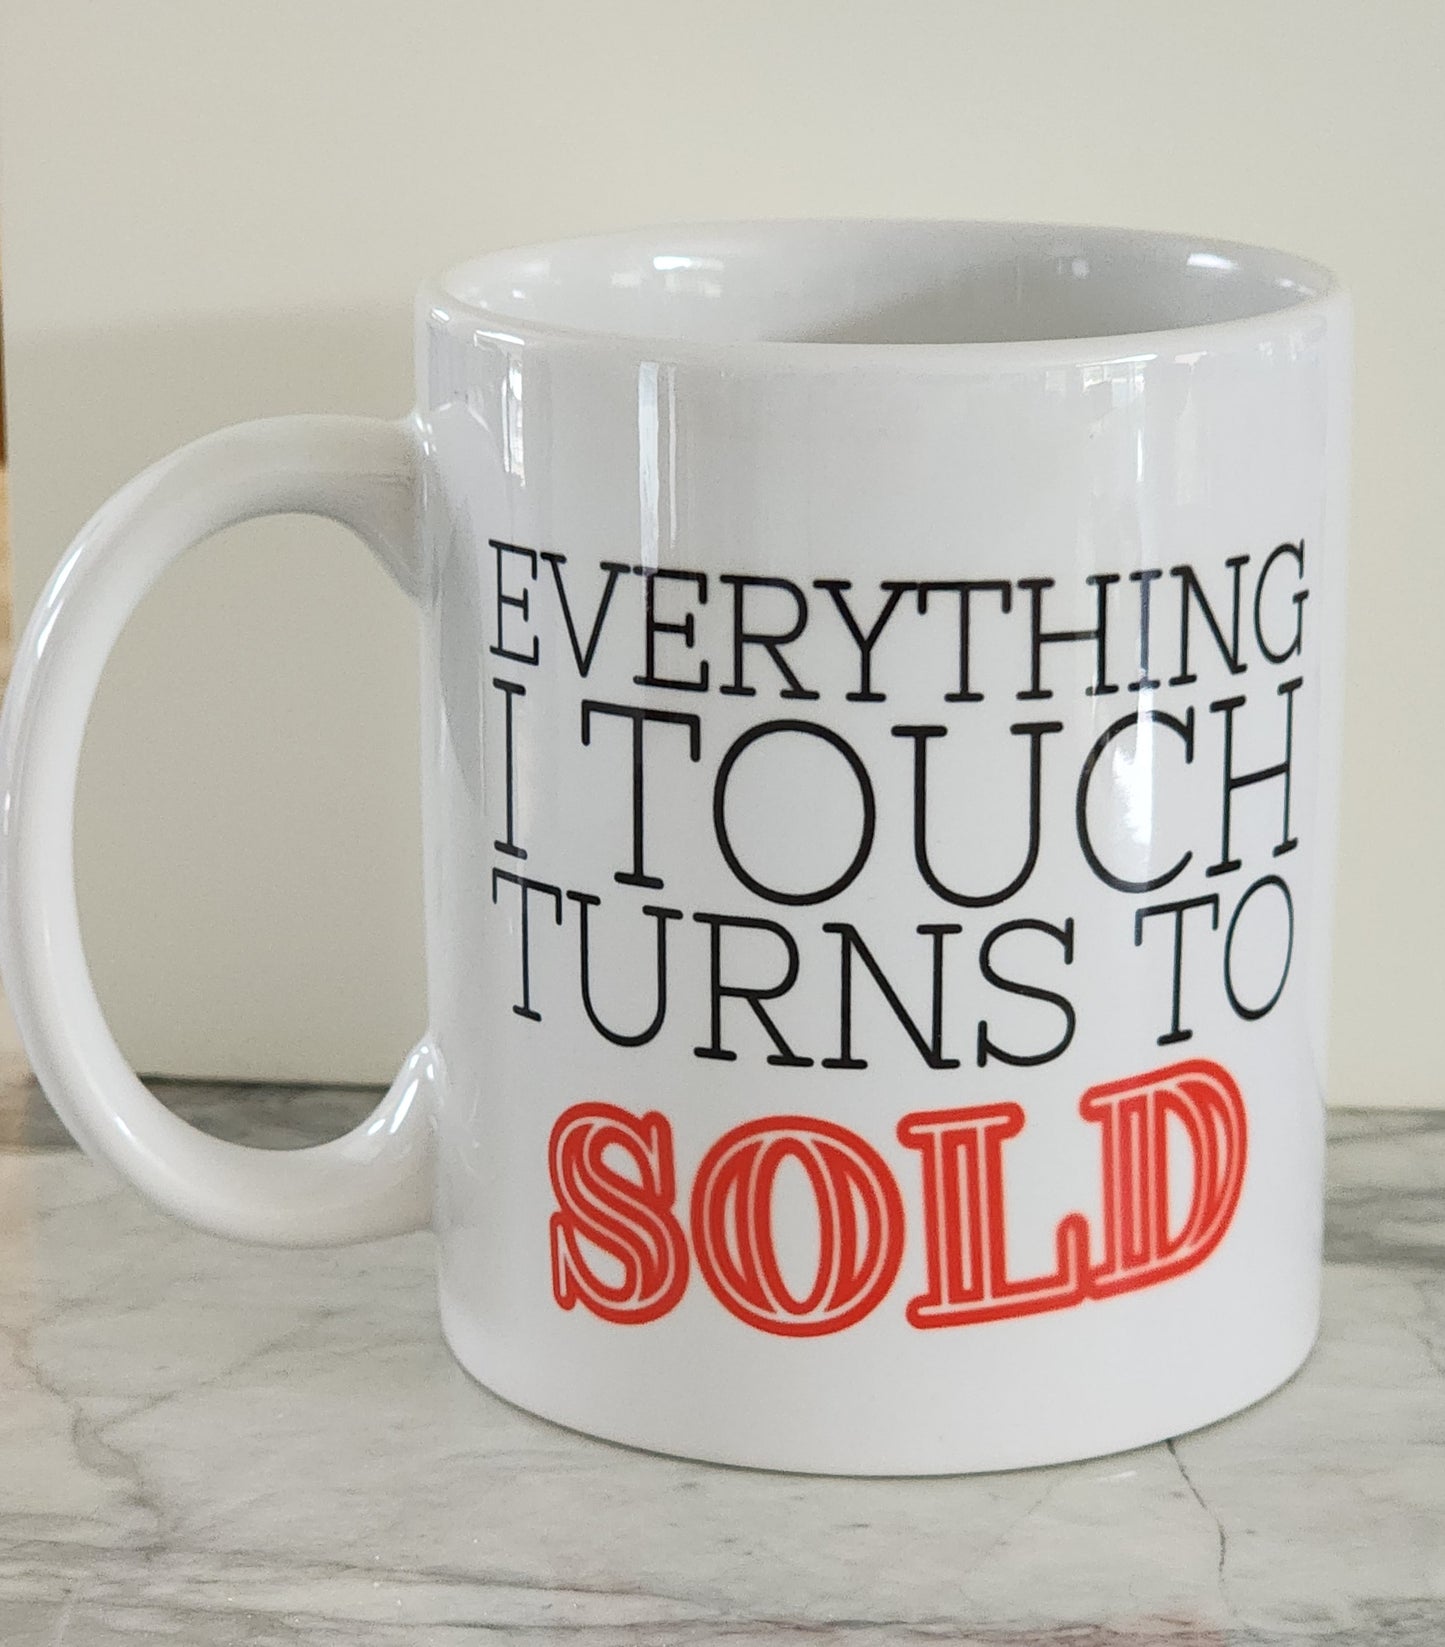 SOLD coffee mug